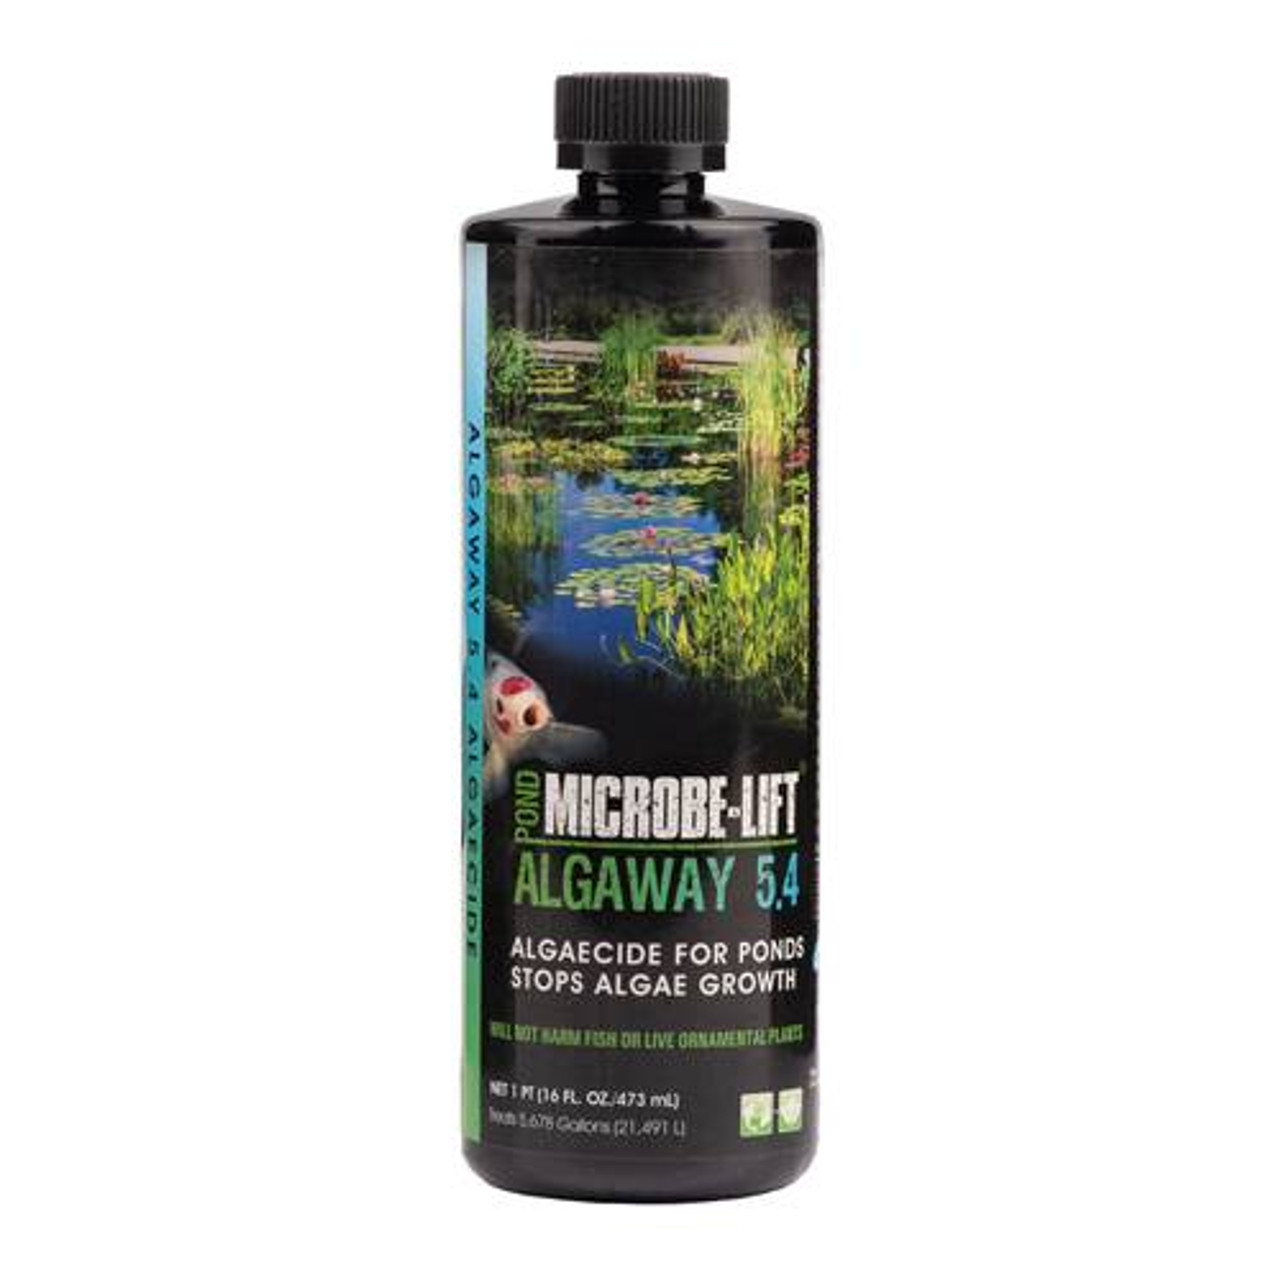 Microbe-Lift Algaway 5.4 - 16 oz